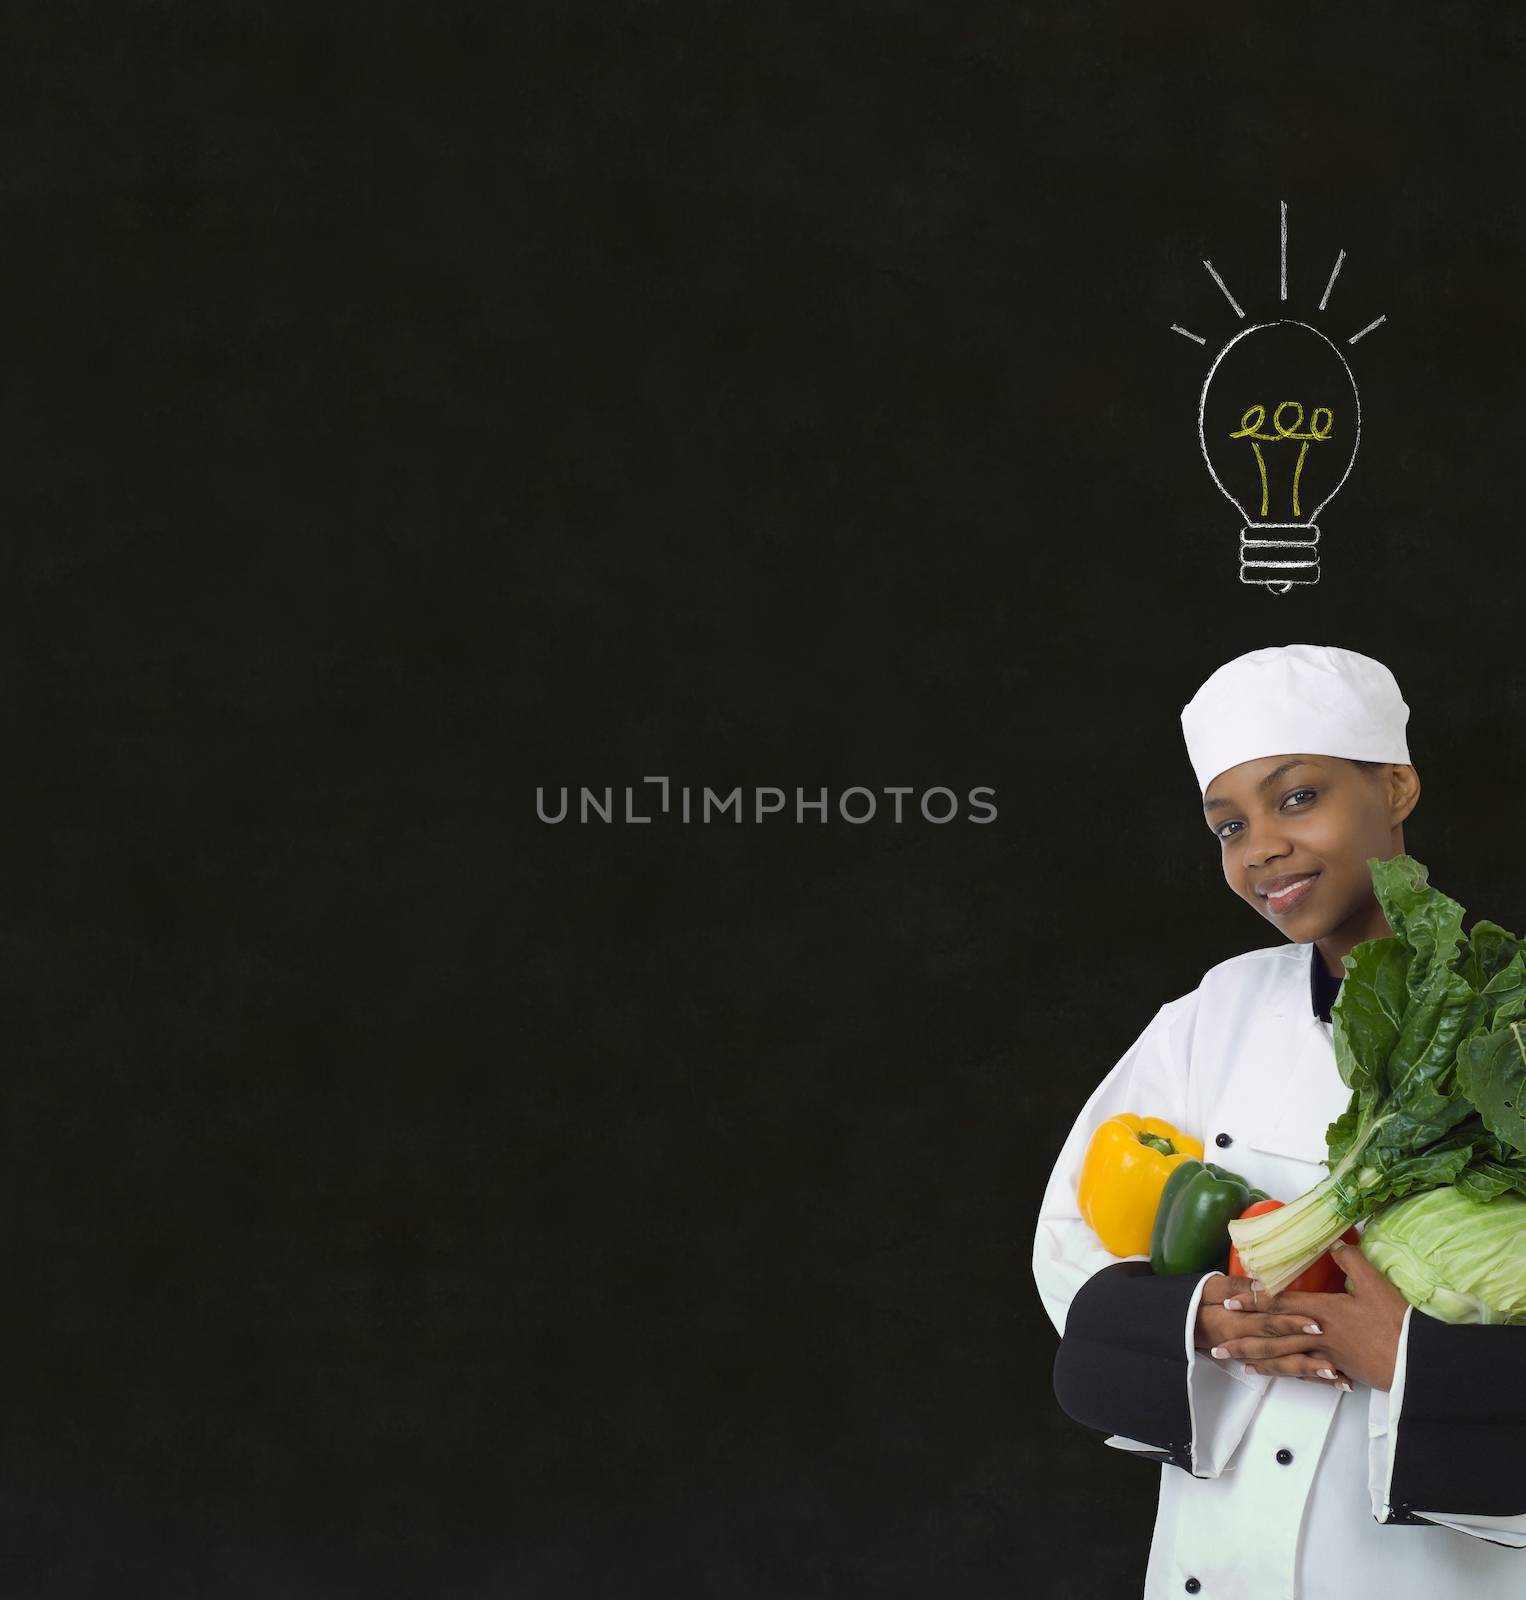 Bright idea lightbulb thinking African or African American woman chef on chalk blackboard background